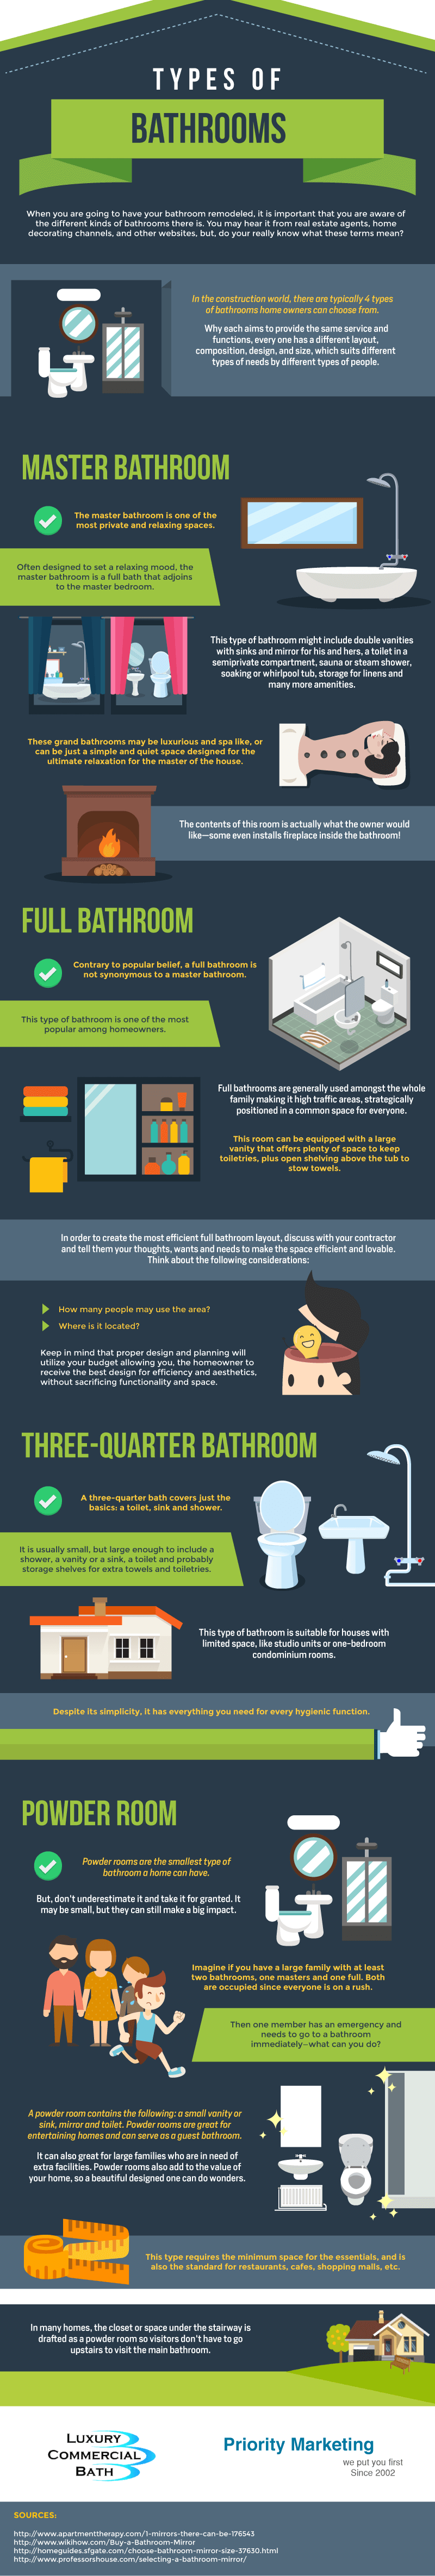 Types-of-Bathrooms